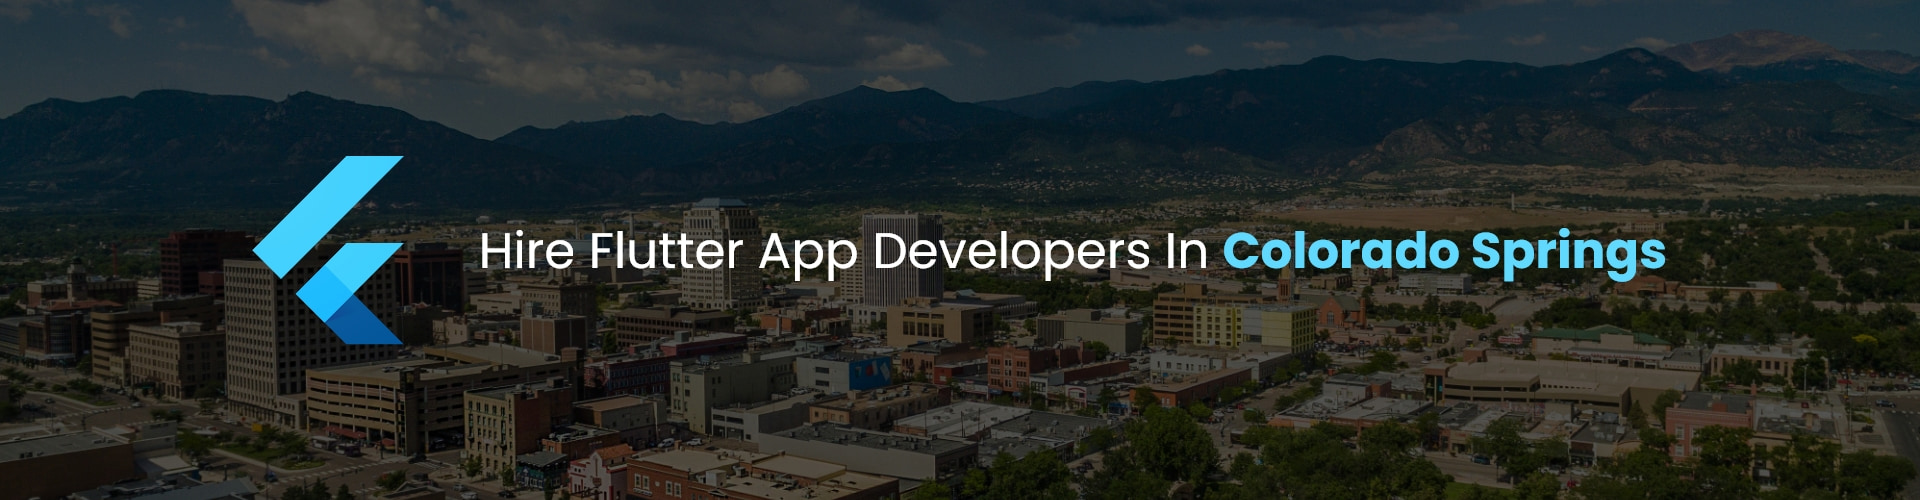 flutter app developers in colorado springs